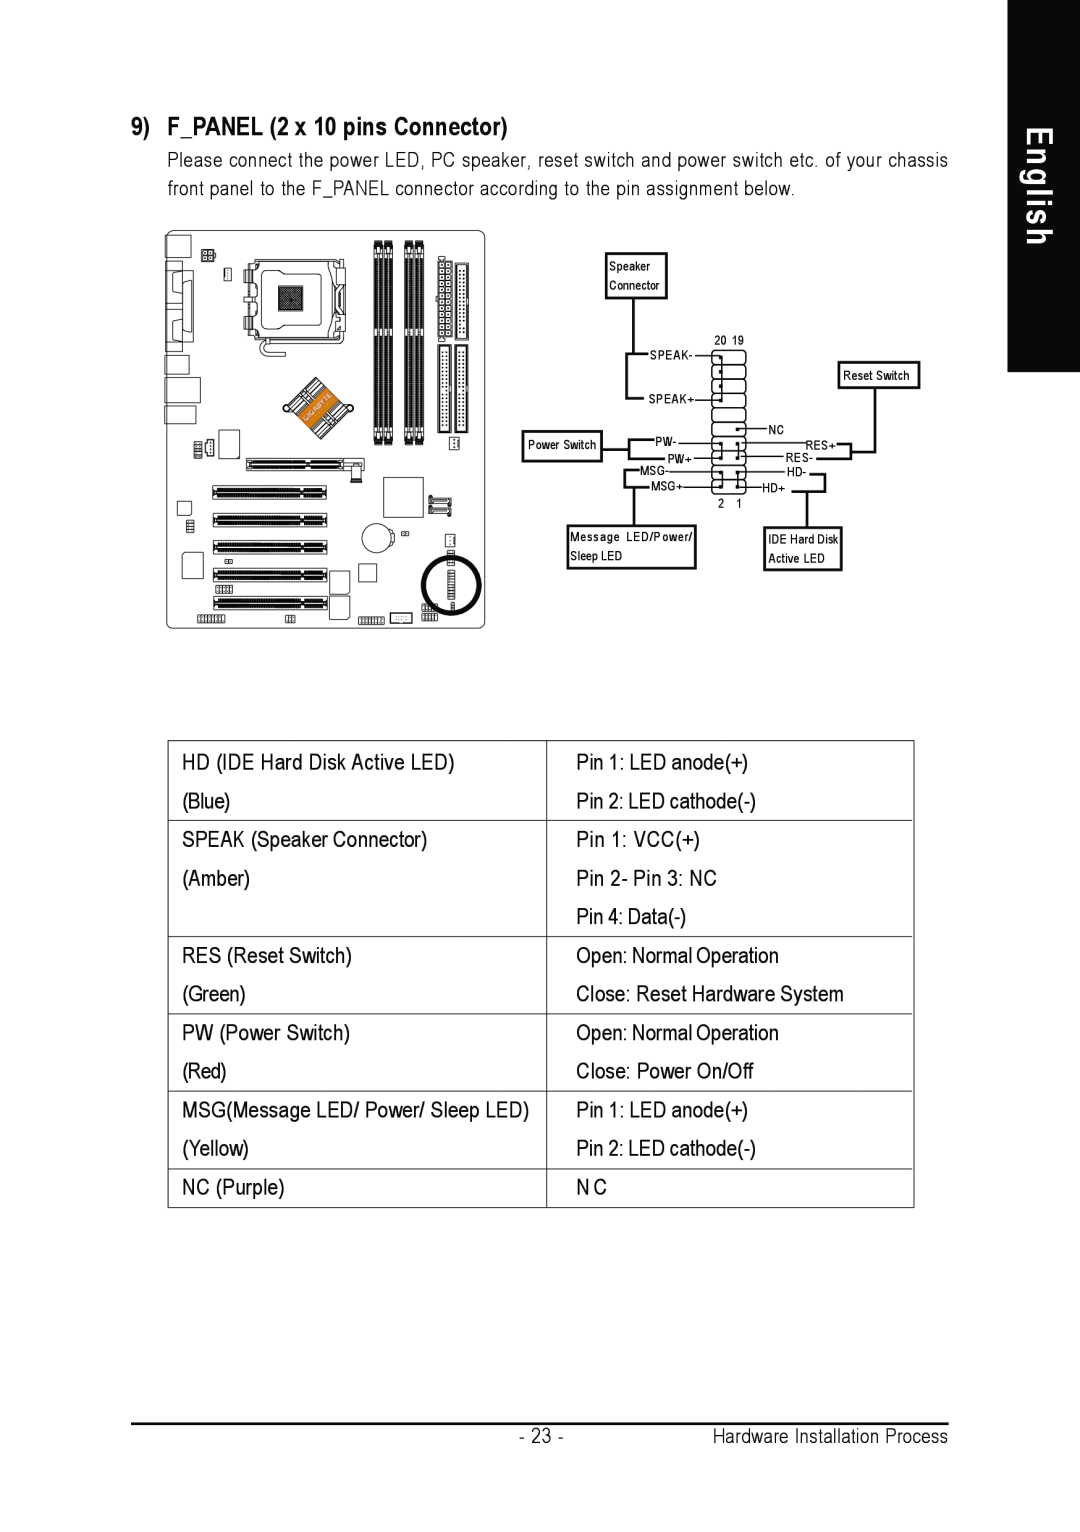 Gigabyte AGP 4X/8X manual English, FPANEL 2 x 10 pins Connector 